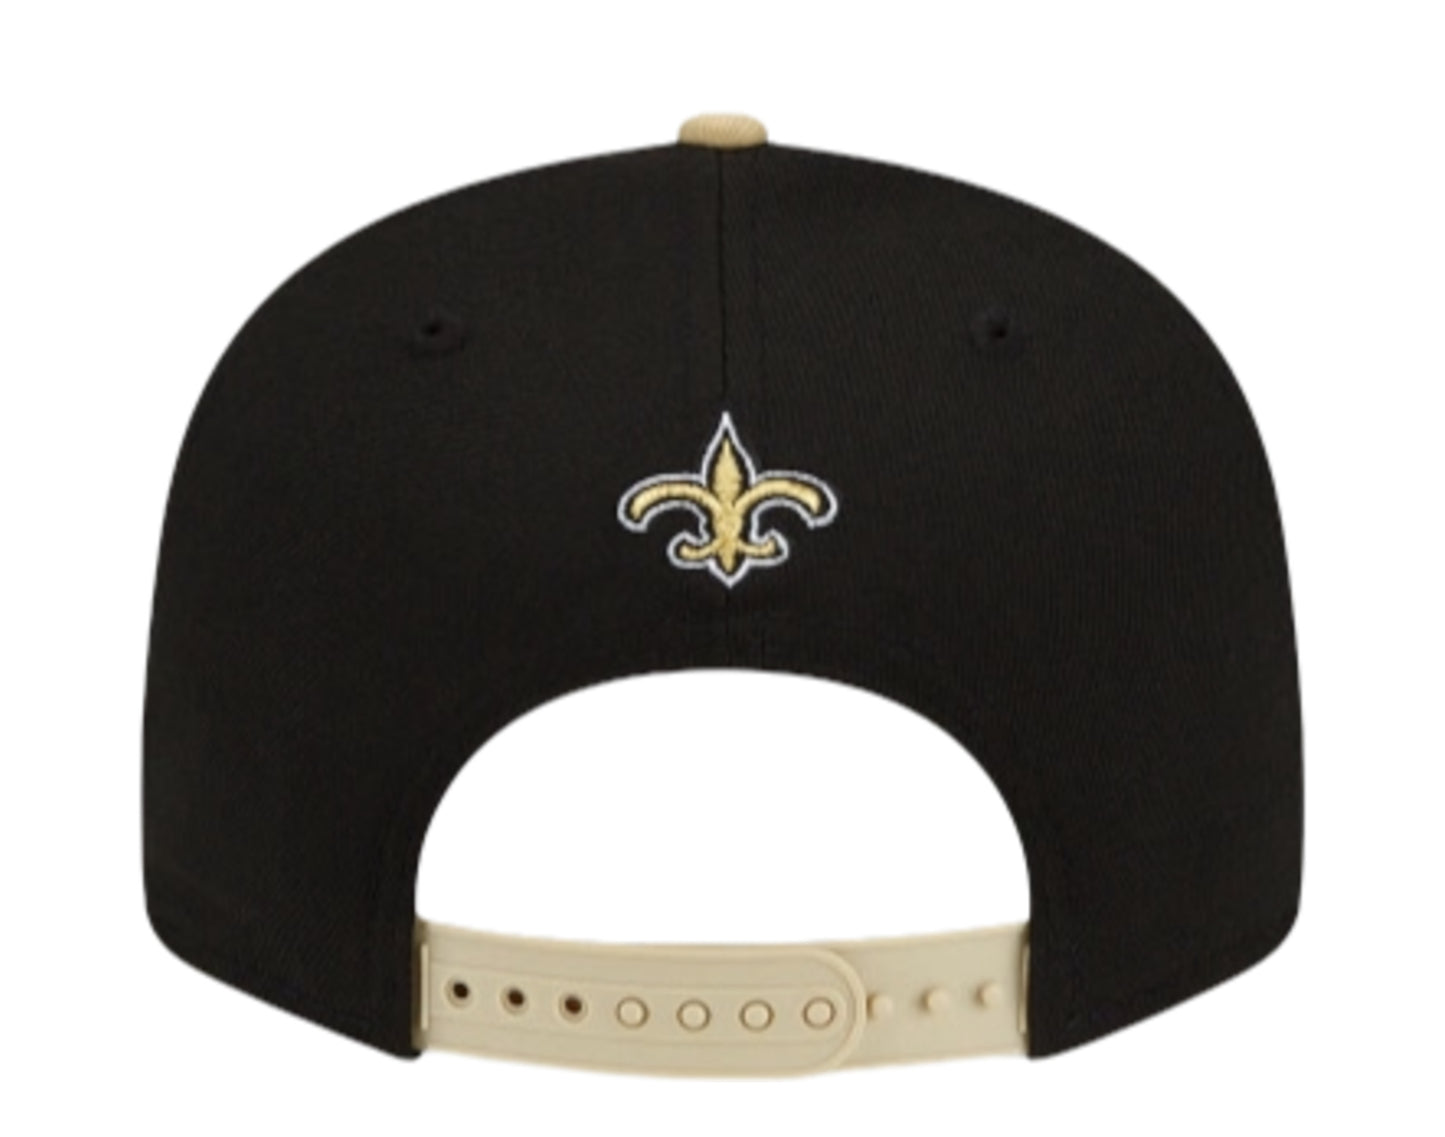 New Era 9Fifty NFL New Orleans Saints 2022 Draft Snapback Hat